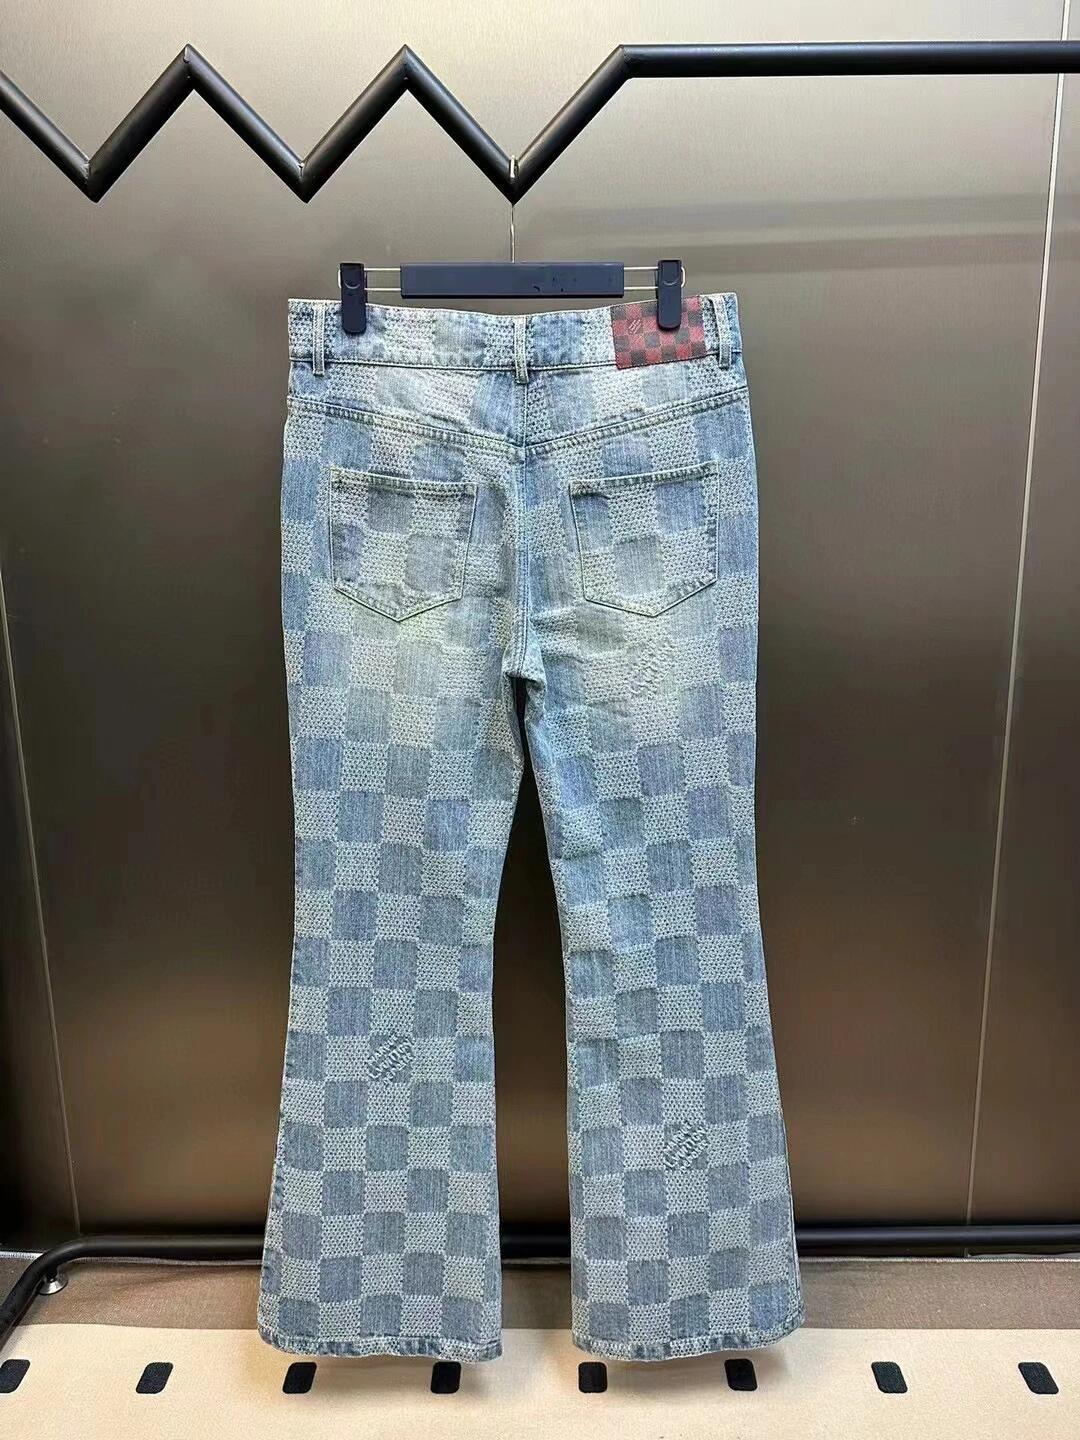 Checkerboard casual jeans